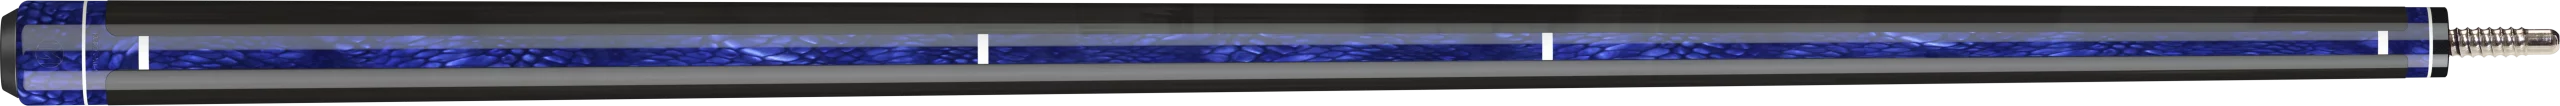 std 2024 - kuro - cmi-4 - blue snake - molinari billiards carbon cue - full